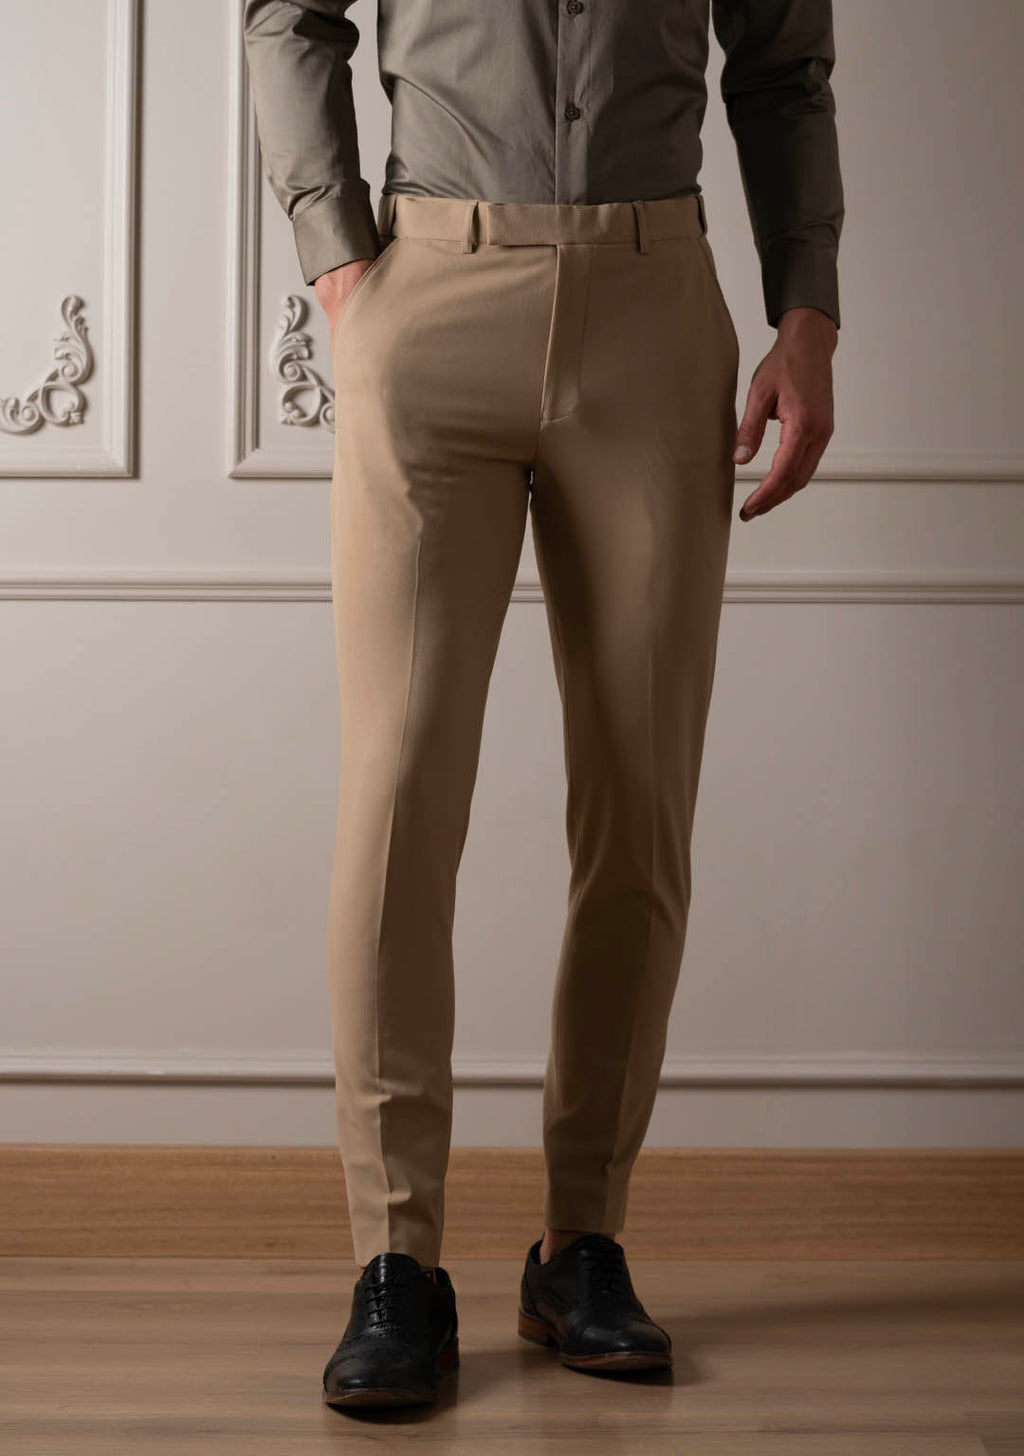 Arctic Dust Colour Formal Trousers for Men - Elite Trouser by Aristobrat